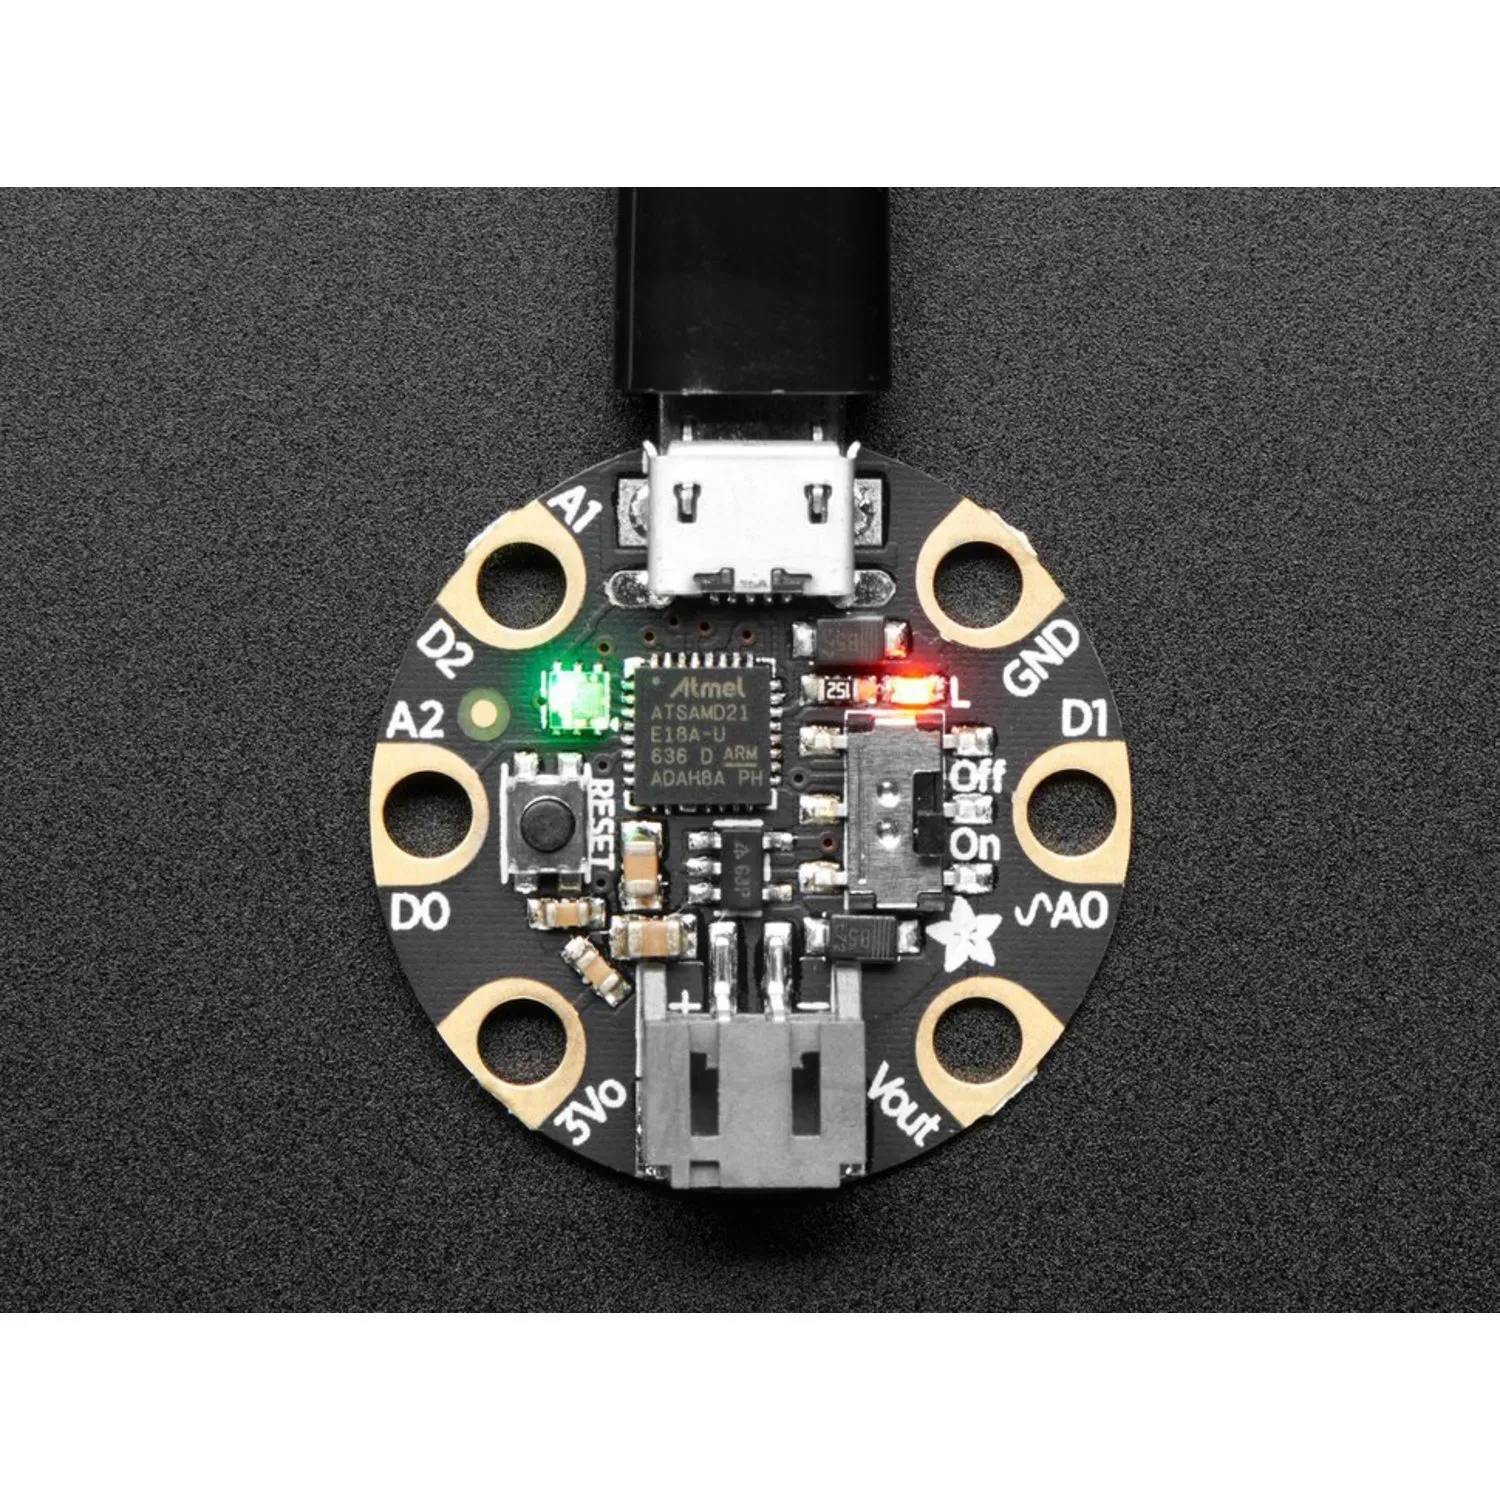 Photo of Adafruit GEMMA M0 - Miniature wearable electronic platform